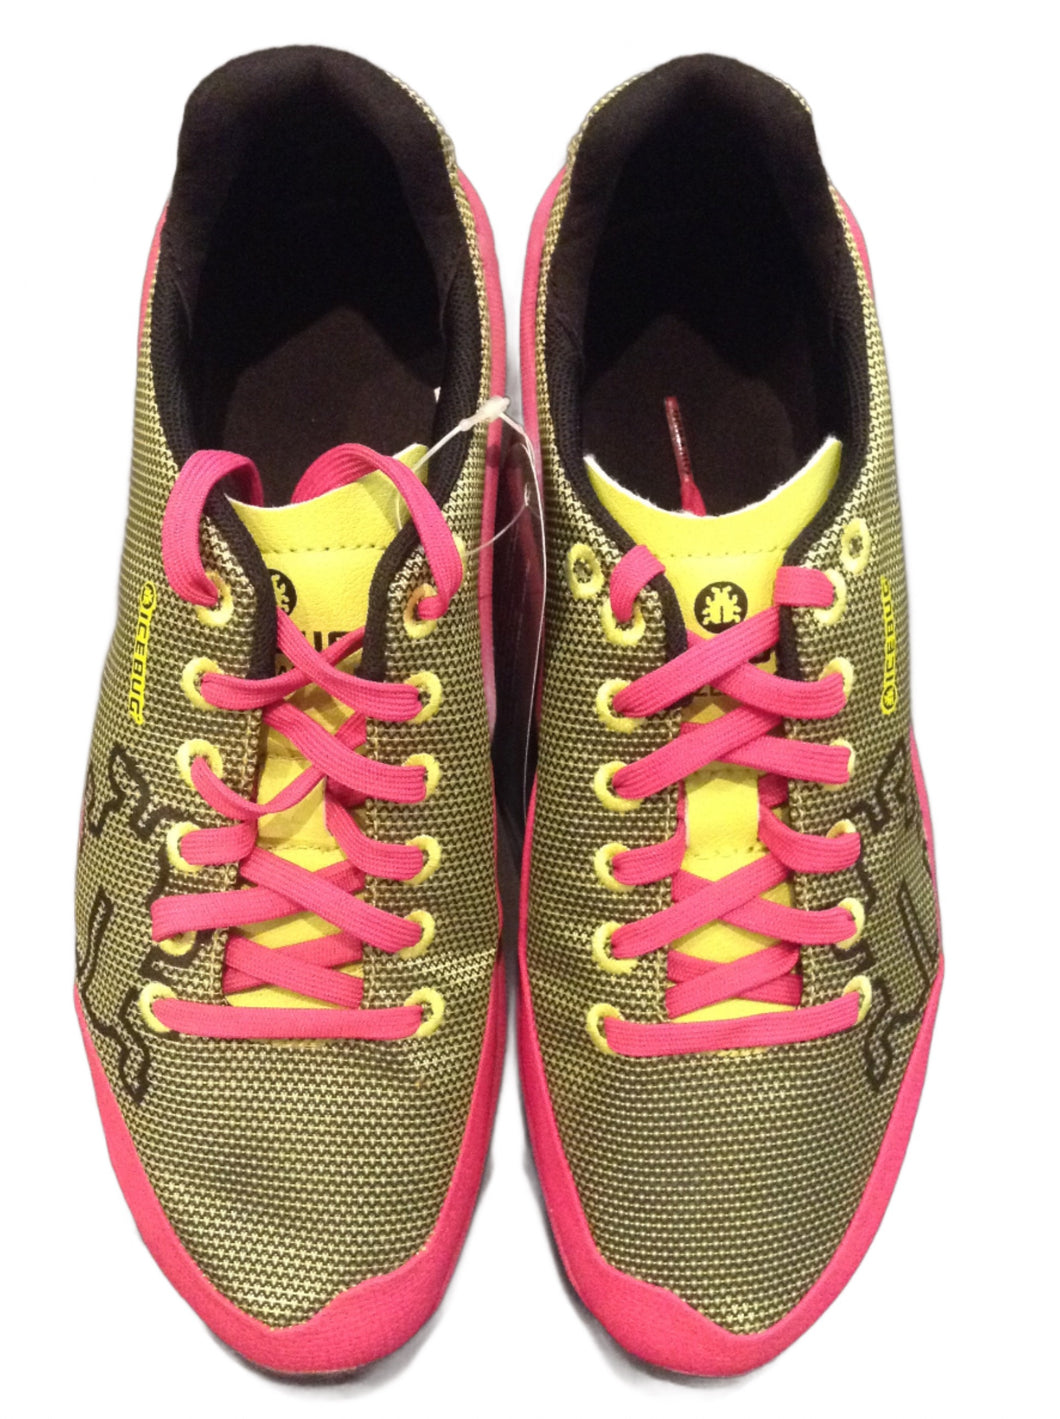 Women's Carbide studded, shoe lemon with pink laces